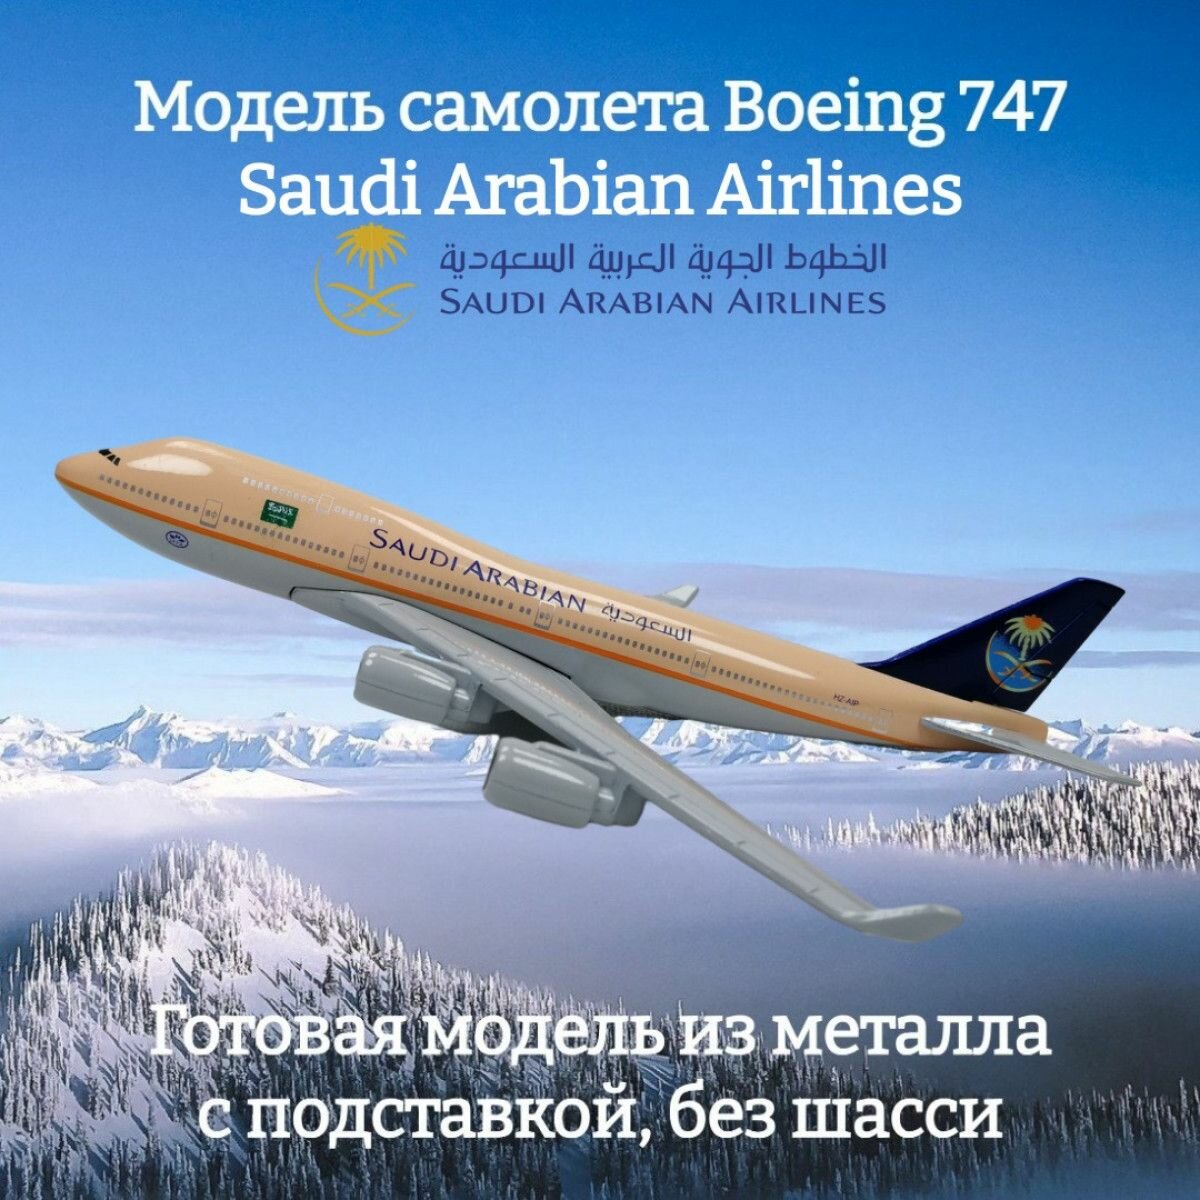 Модель самолета Boeing 747 Saudi Arabian Airlines длина 15 см